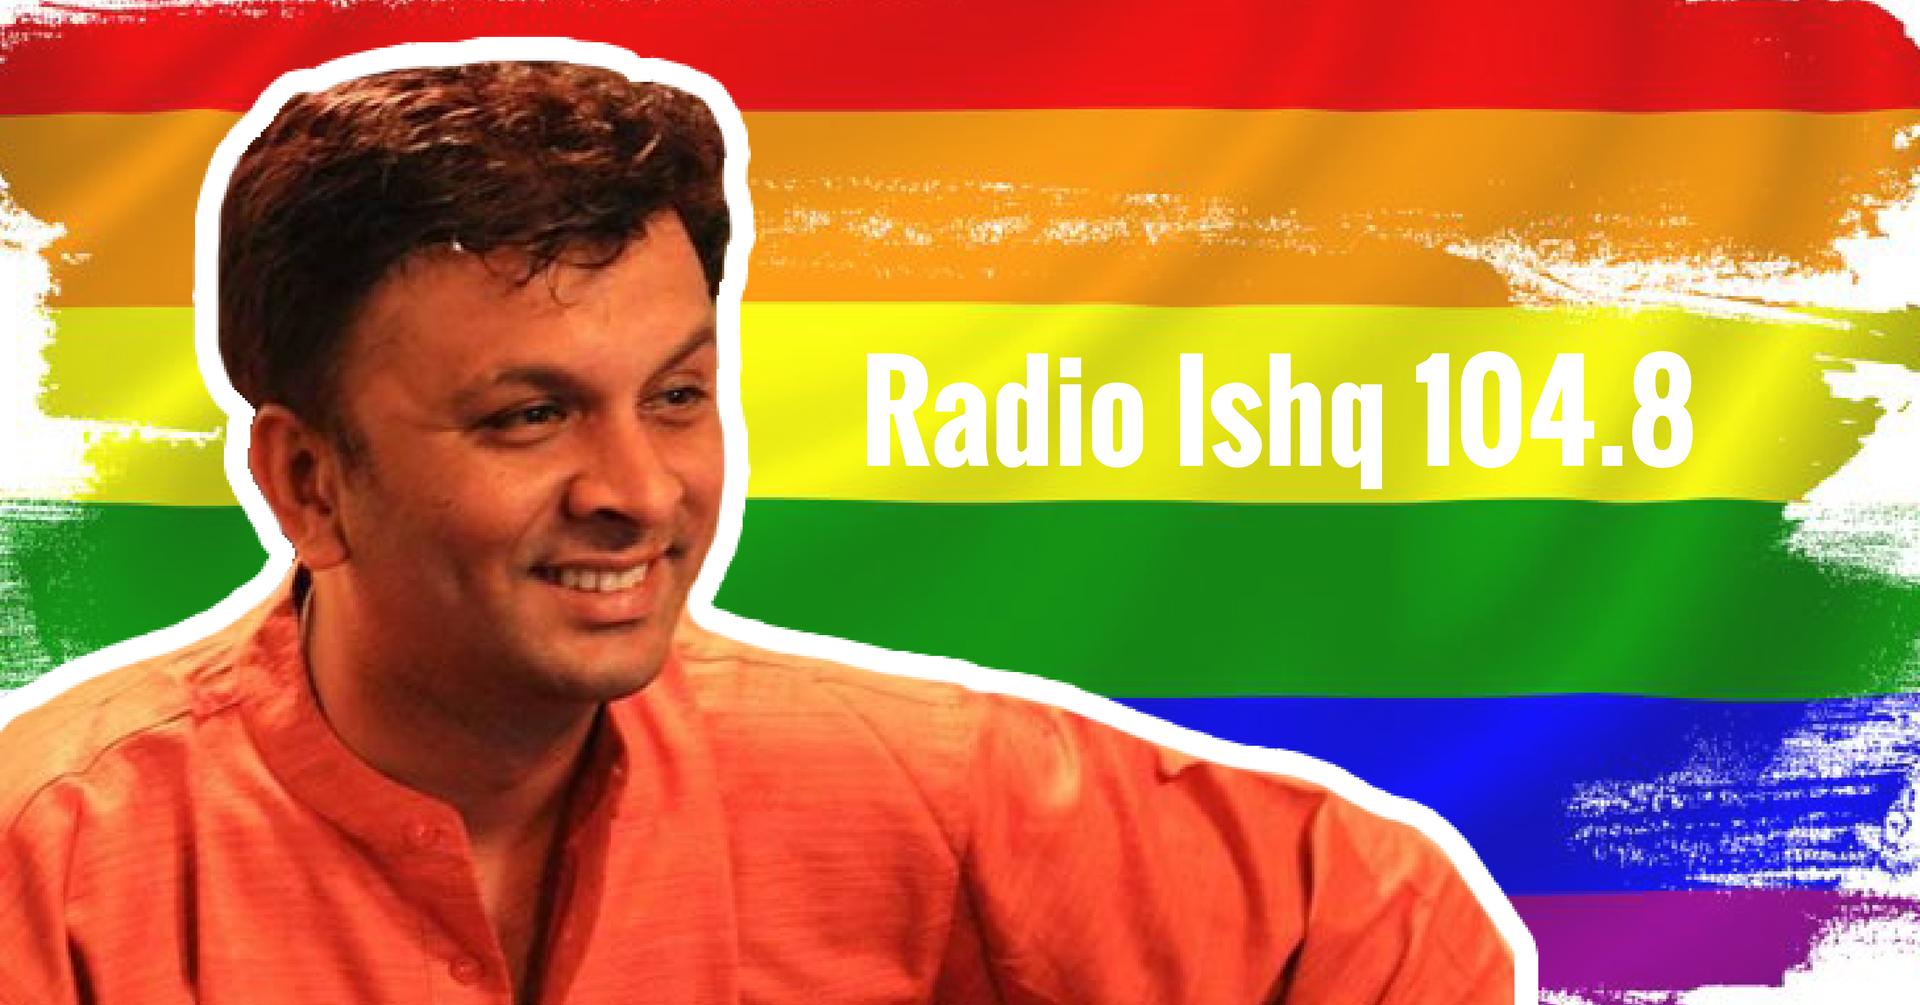 India’s First Ever LGBTQ Radio Show Airs On Radio Ishq 104.8 FM